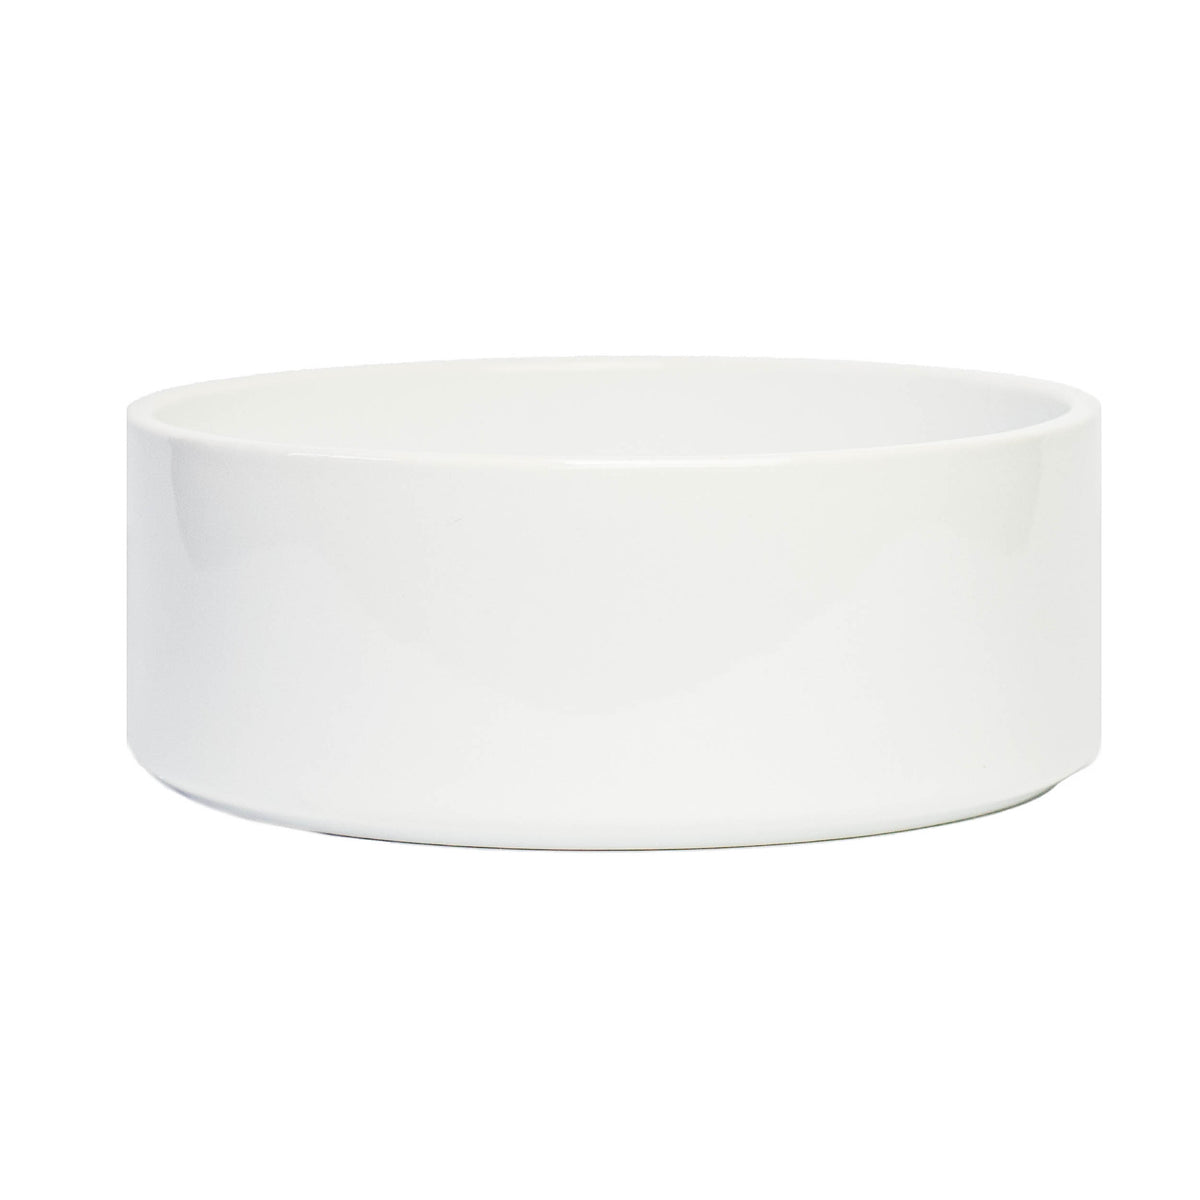 Personalised bowl for cats / ceramic - 22oz 650ml (design 2)